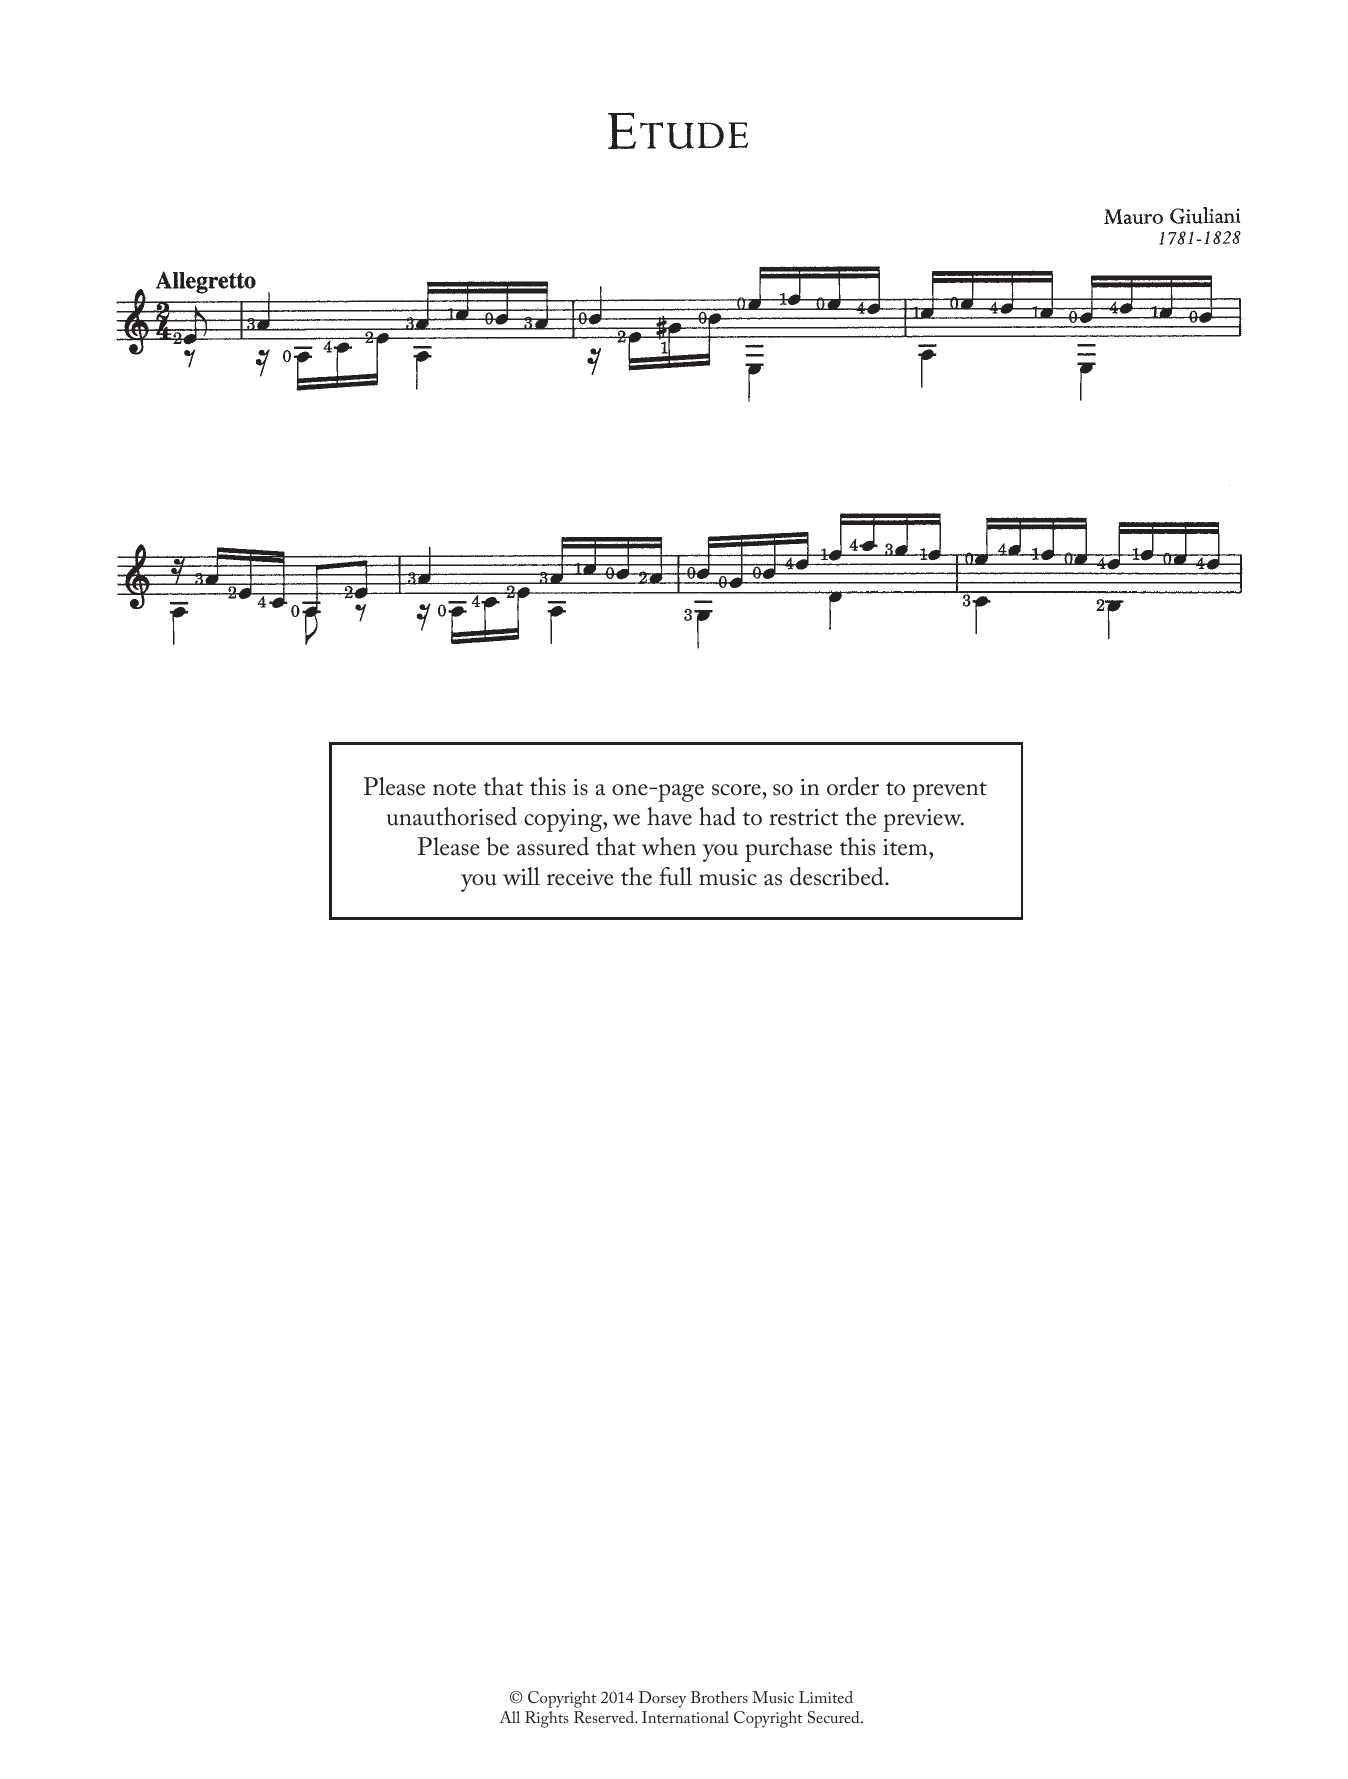 Mauro Giuliani Etude Sheet Music Notes & Chords for Guitar - Download or Print PDF